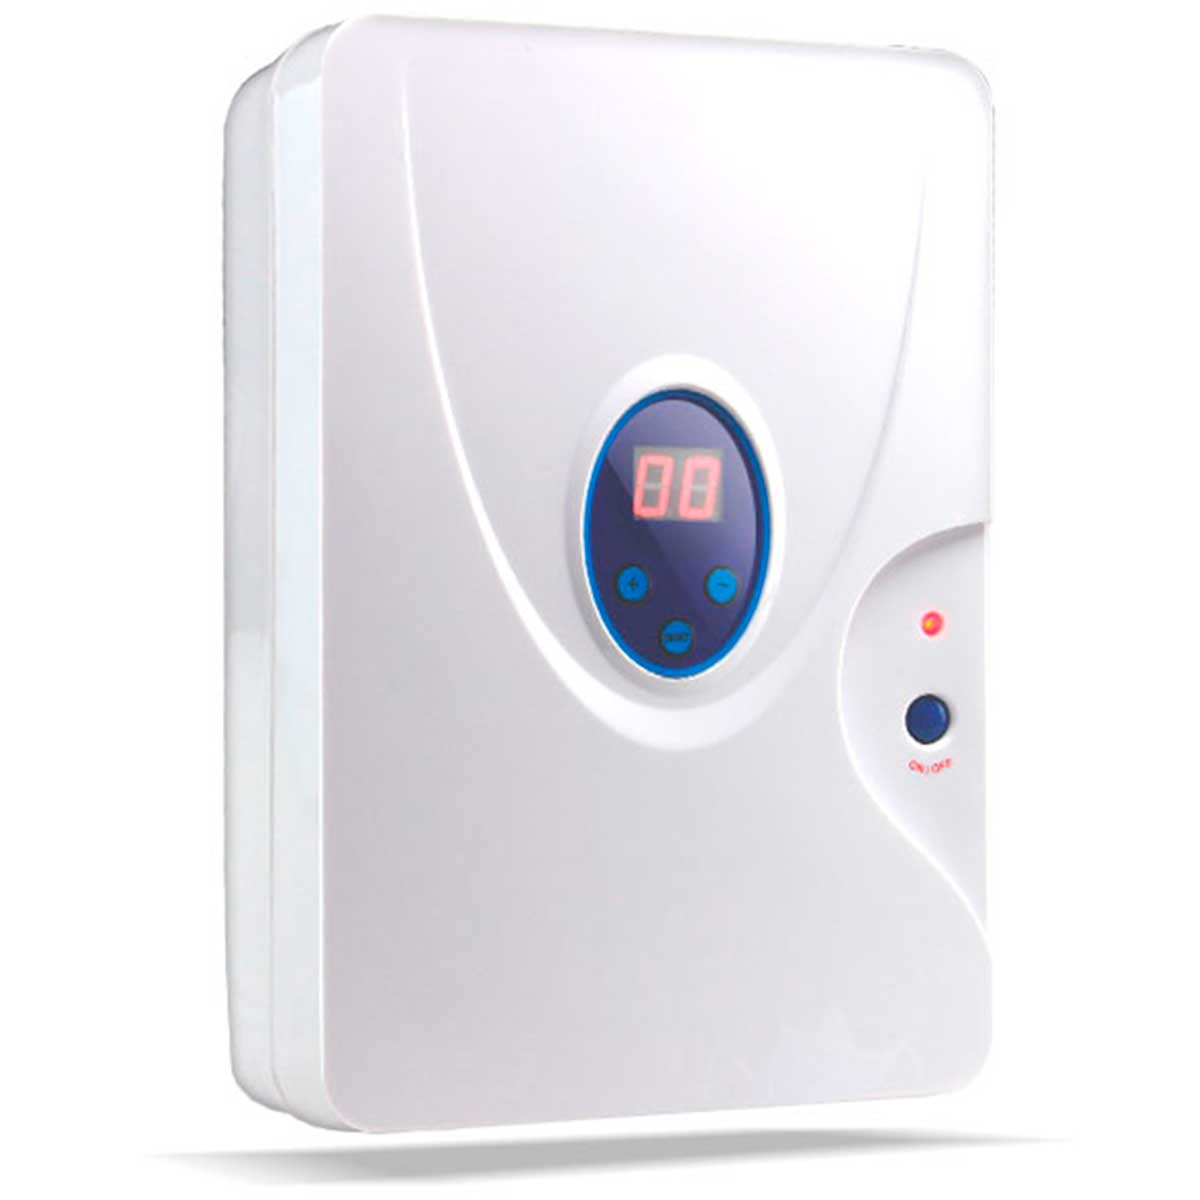 Gridinlux Generador Ozono mini purificador aire y agua multifuncional desinfectante filtra neutraliza malos olores potencia personalizable 10w gl60022 100 m2 10